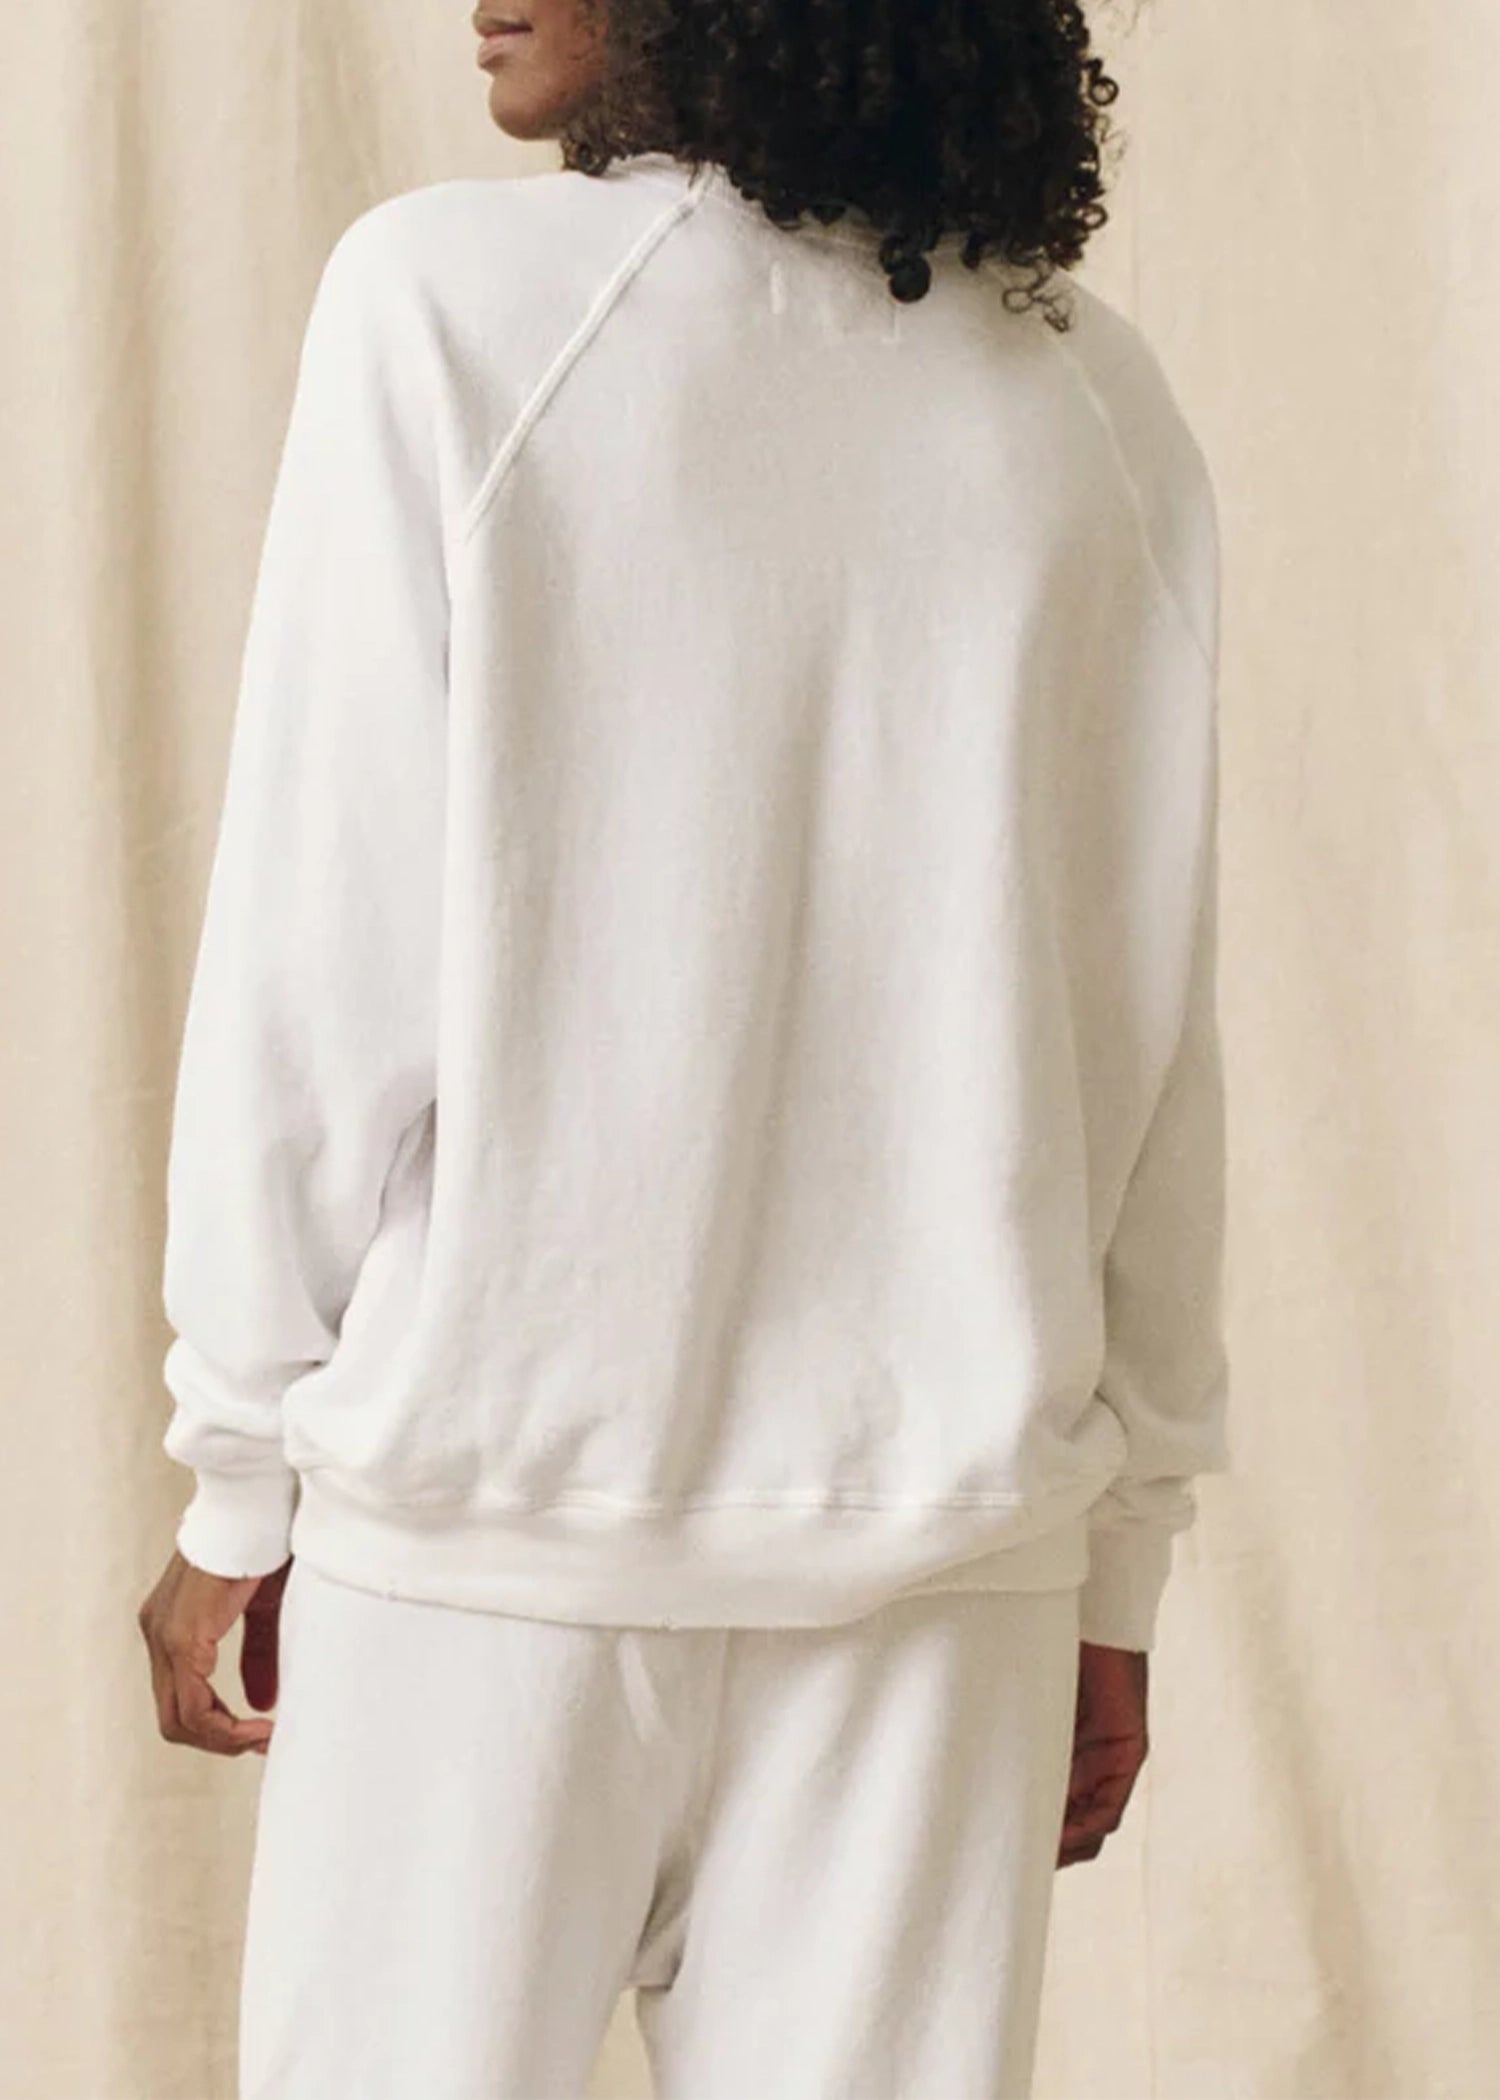 The-Great-College-Sweatshirt-True-White